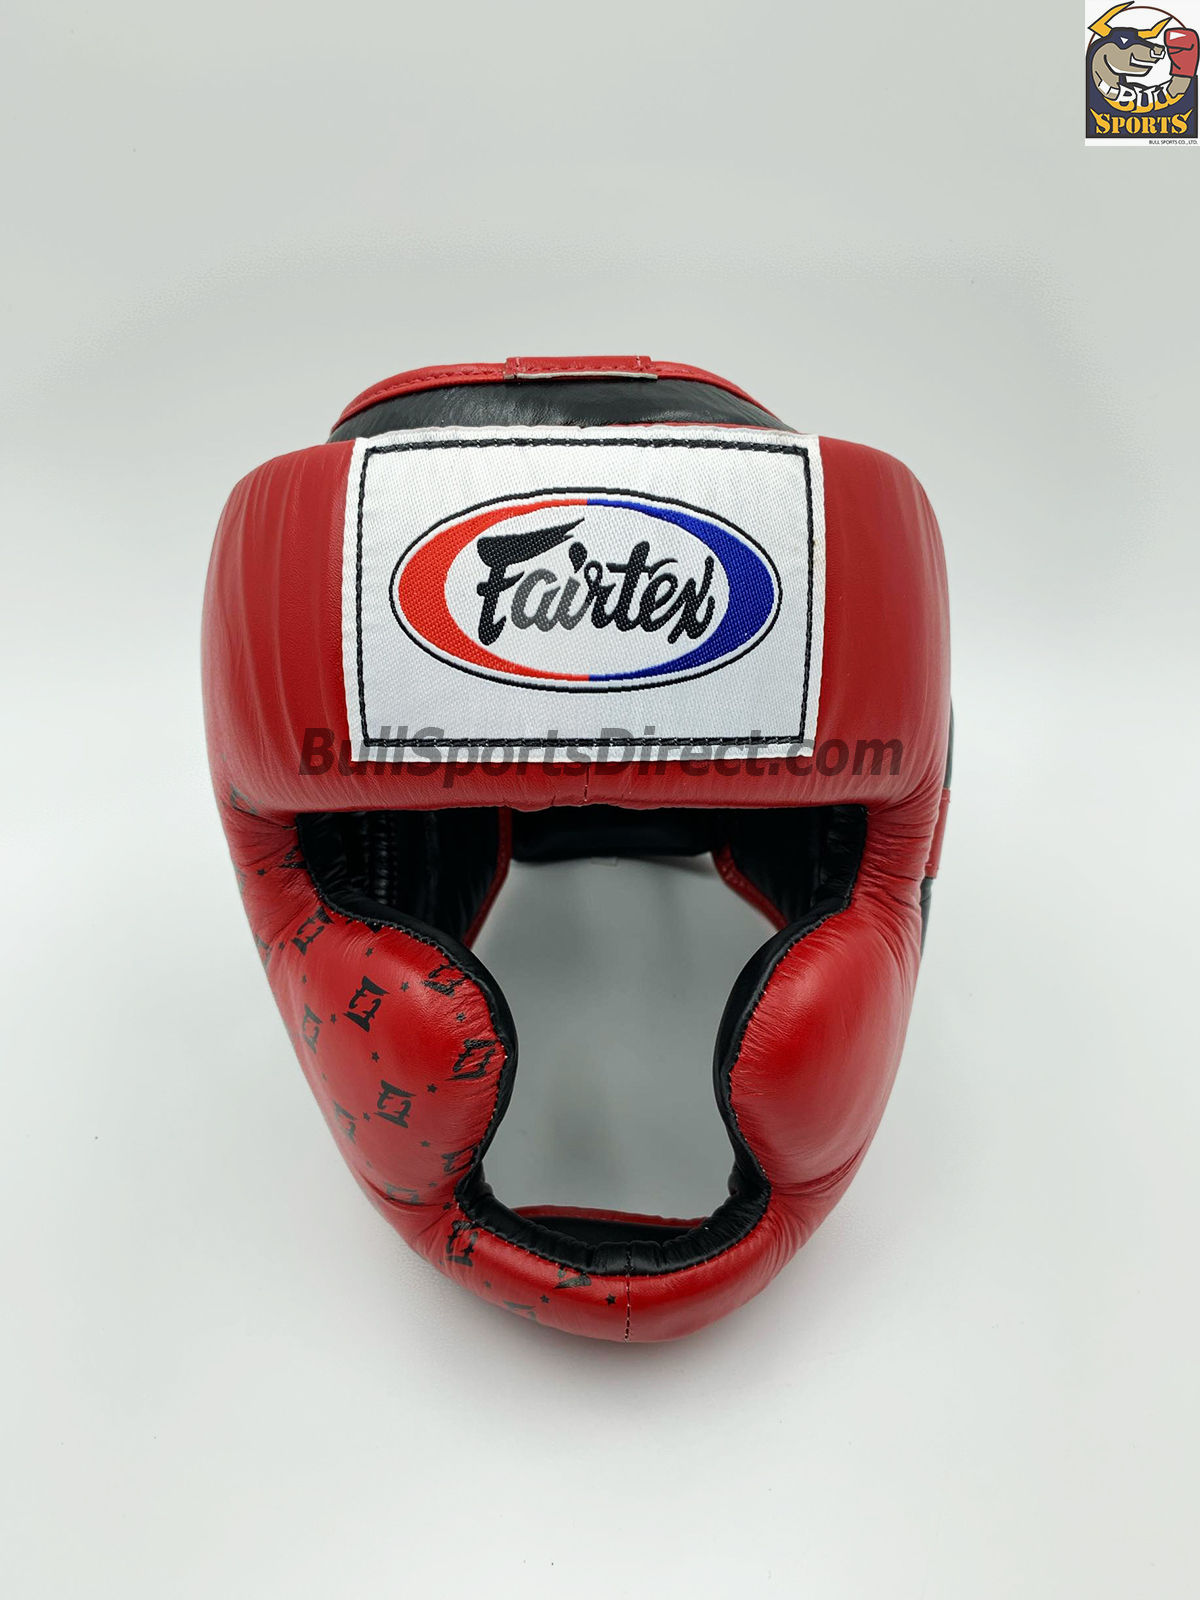 FAIRTEX HG10 MUAY THAI KICK BOXING MMA HEADGUARD Protective Gear SUPER SPARRING 